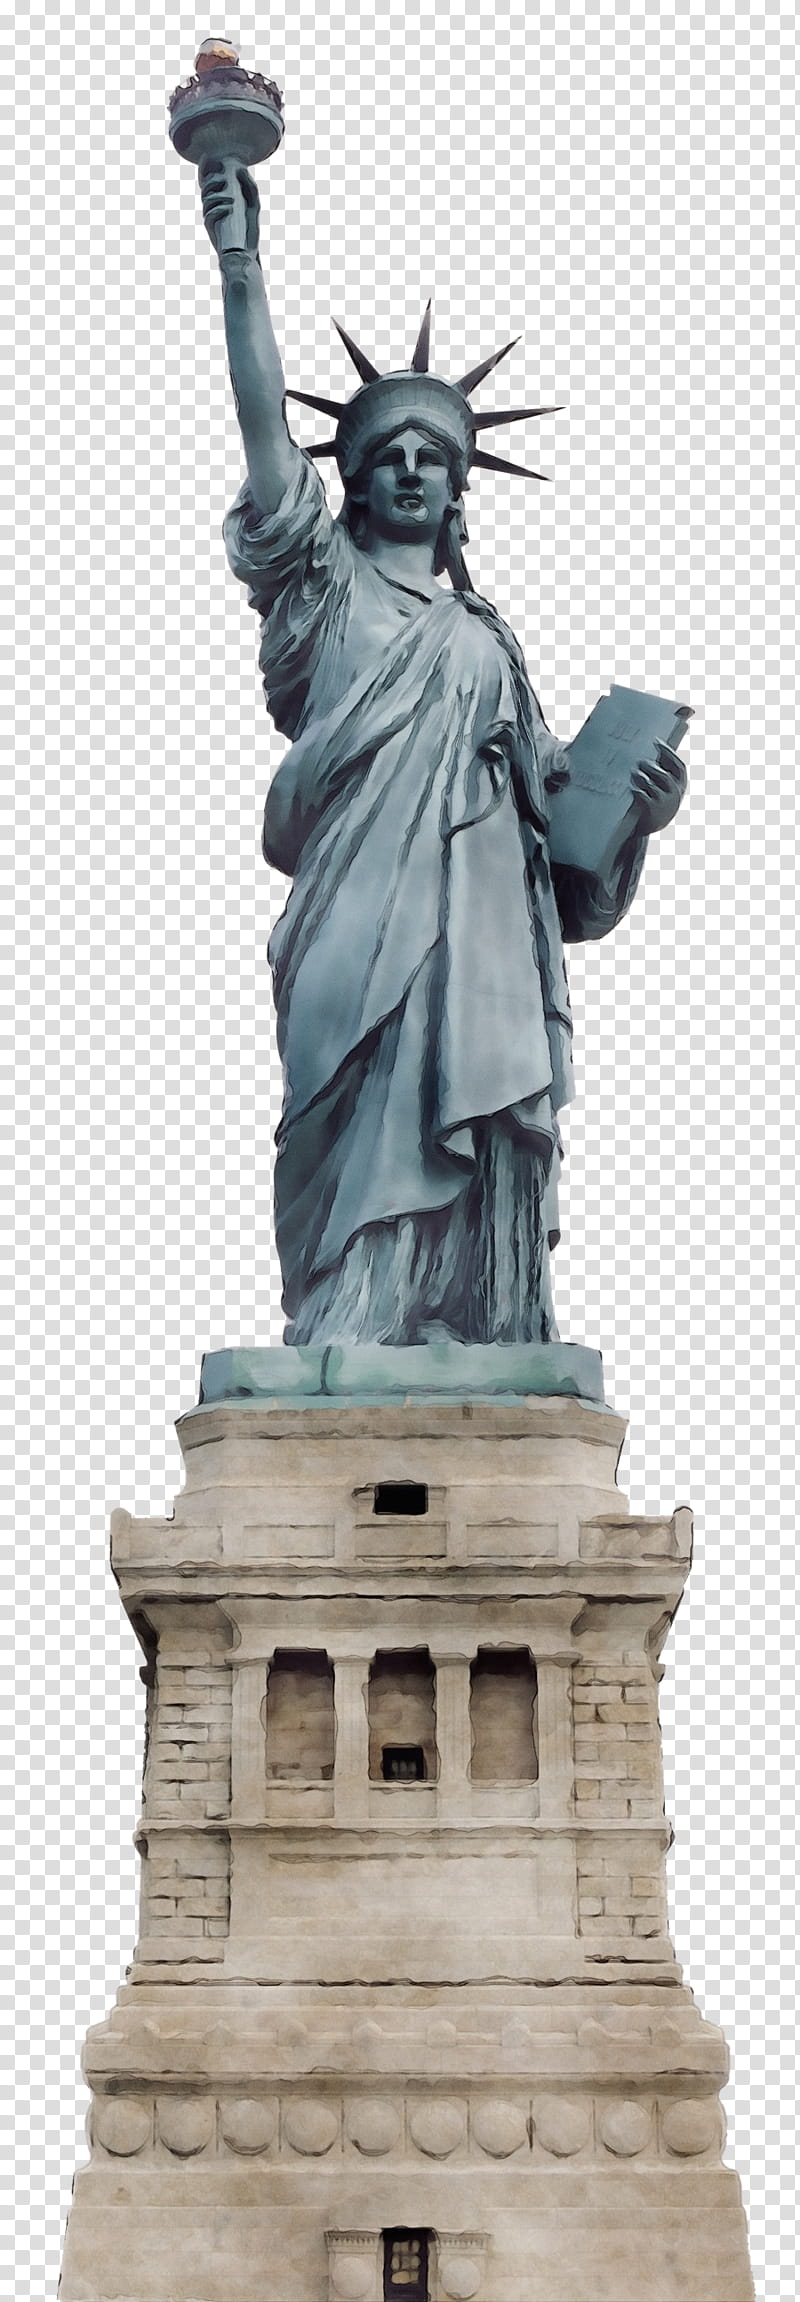 Statue Of Liberty, Statue Of Liberty National Monument, Manneken Pis, Sculpture, Liberty Island, New York, Classical Sculpture, Landmark transparent background PNG clipart